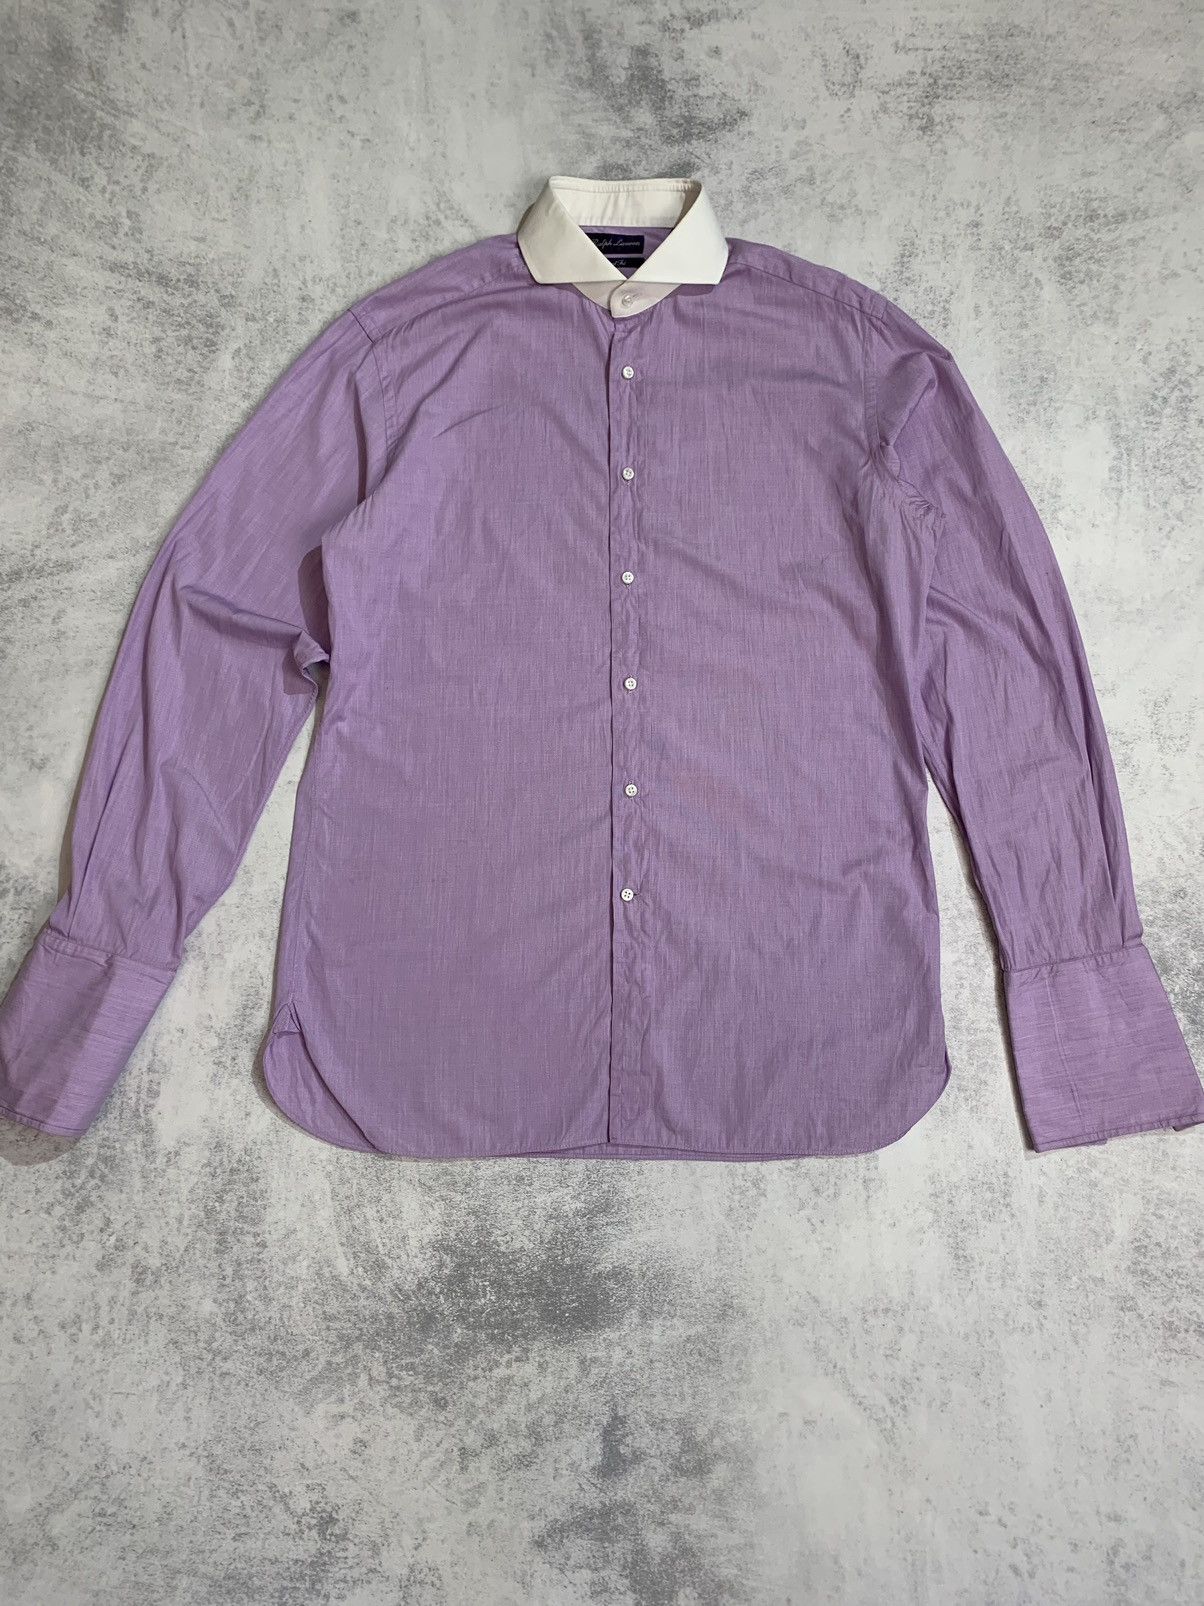 Pre-owned Italian Designers Ralph Laurent Purple Label Designer Luxury Shirt